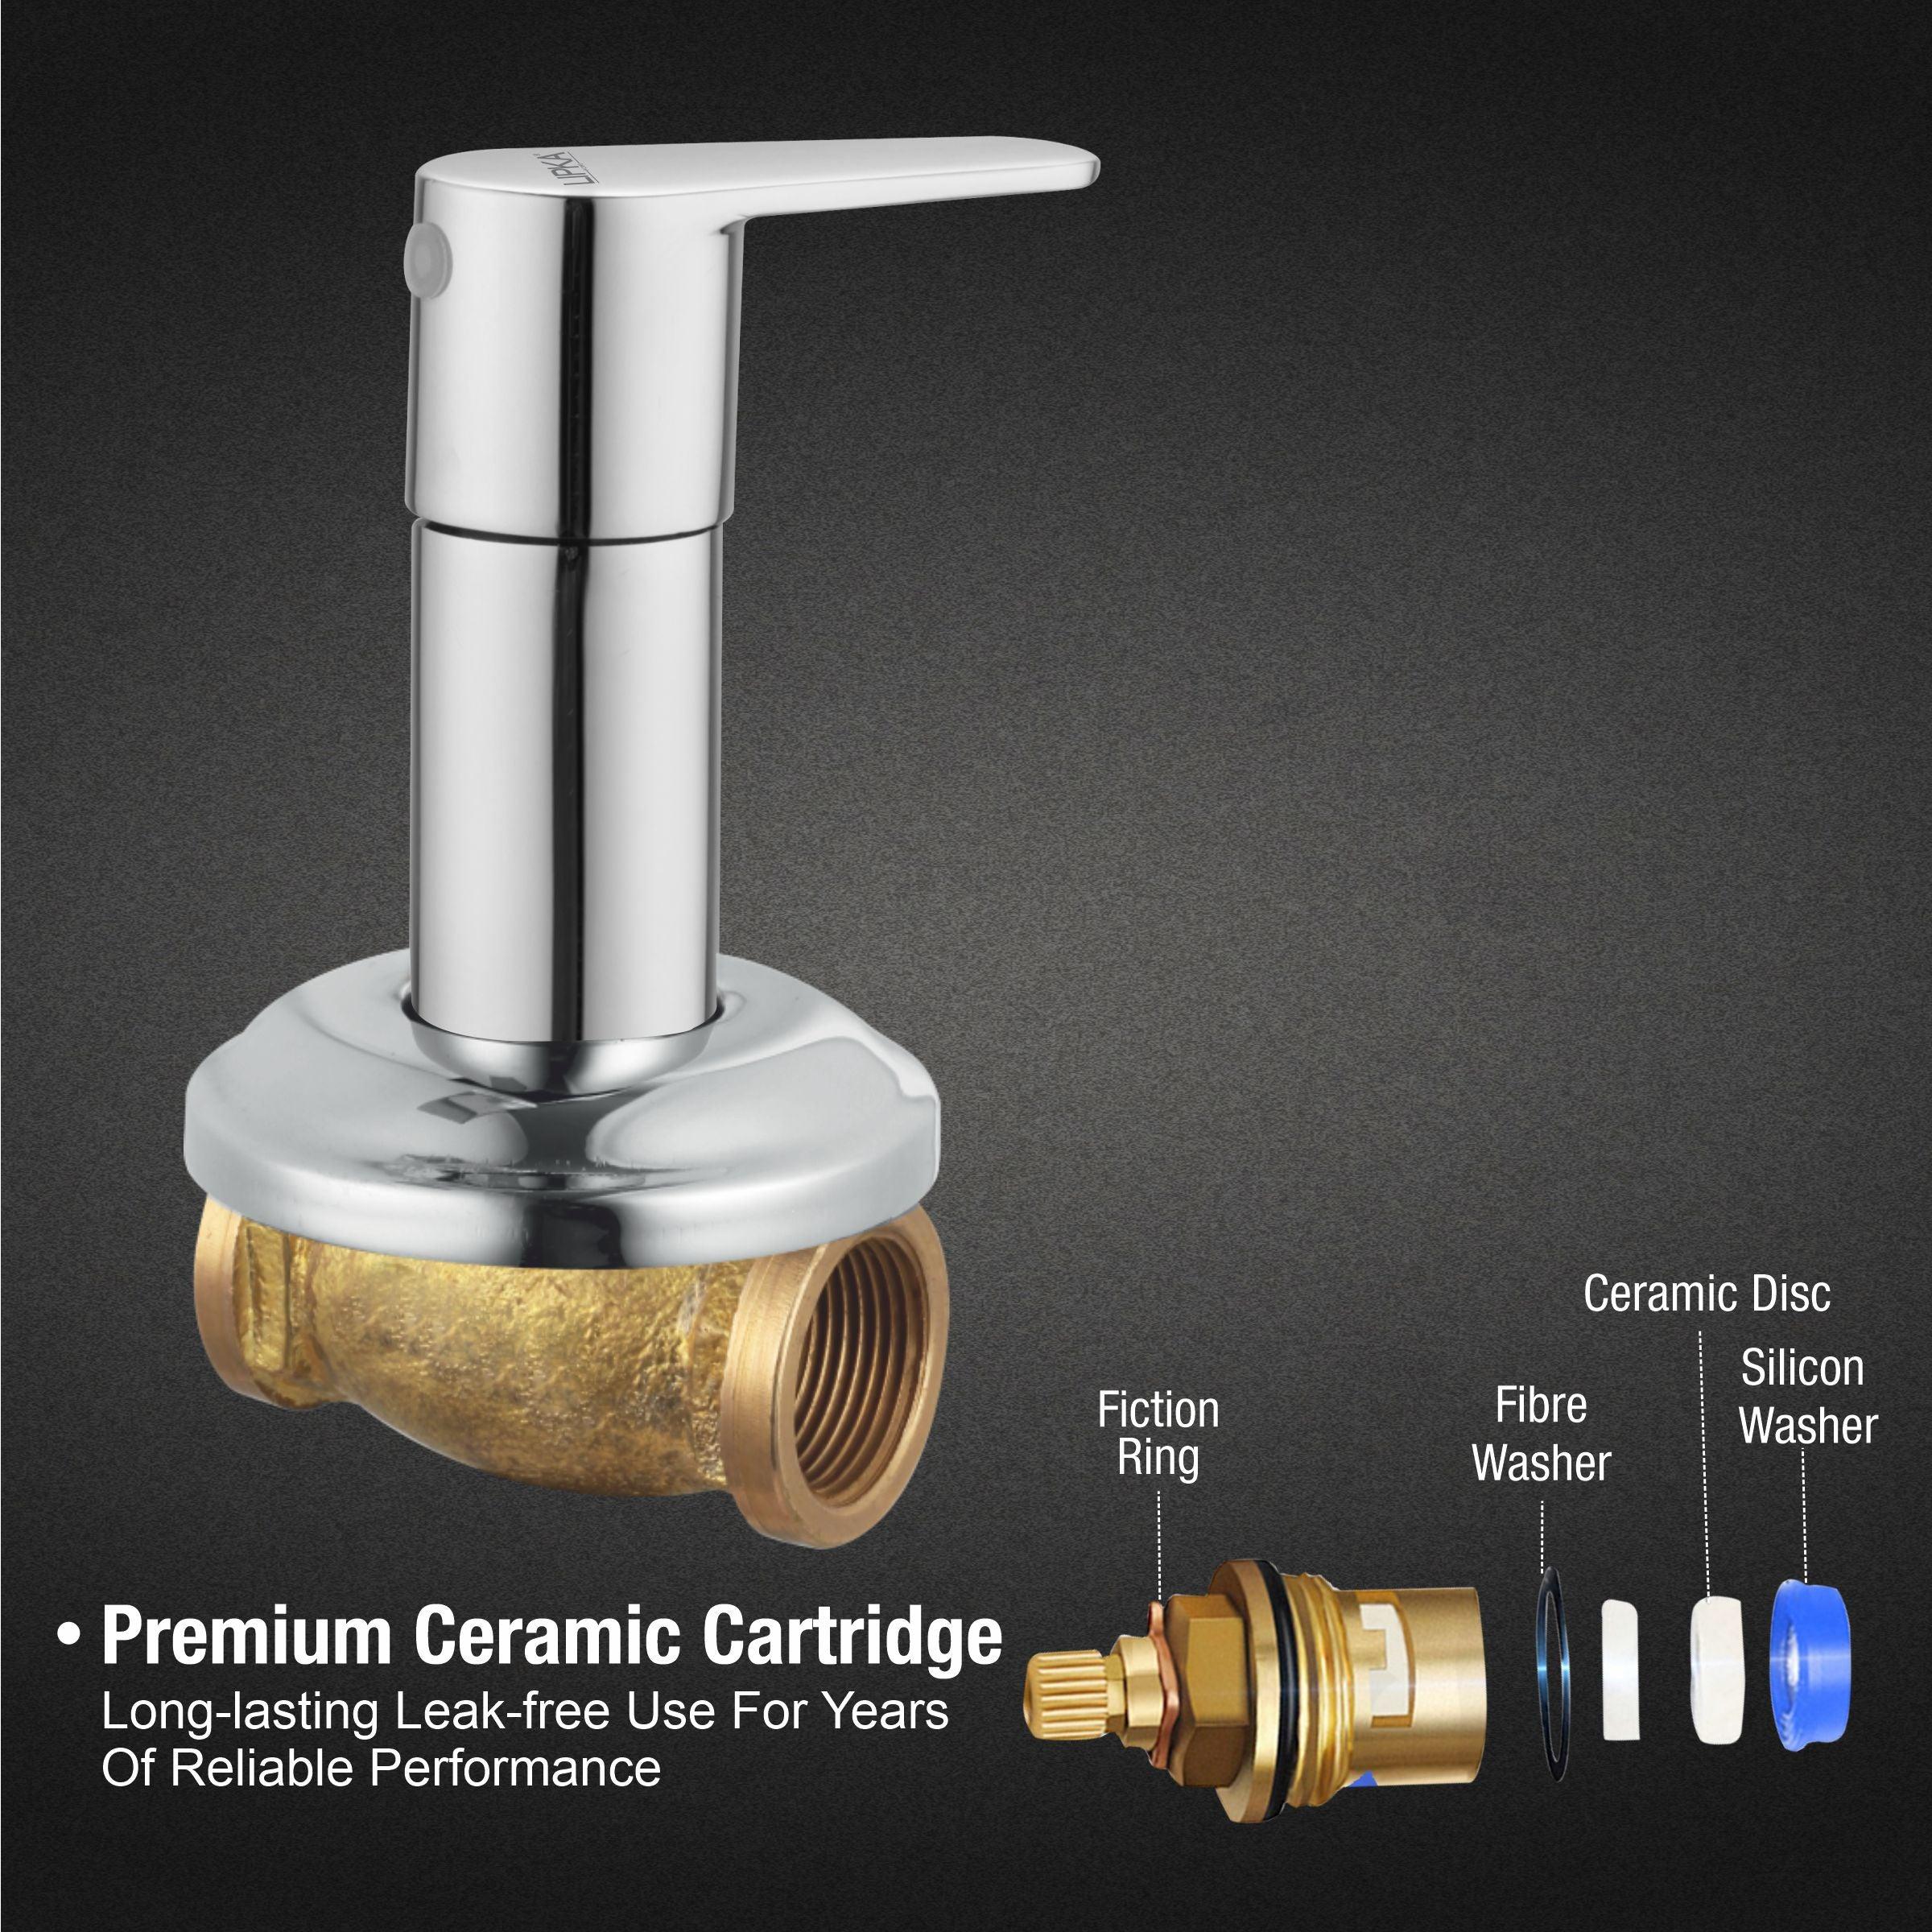 Virgo Concealed Stop Valve 15mm Brass Faucet - LIPKA - Lipka Home